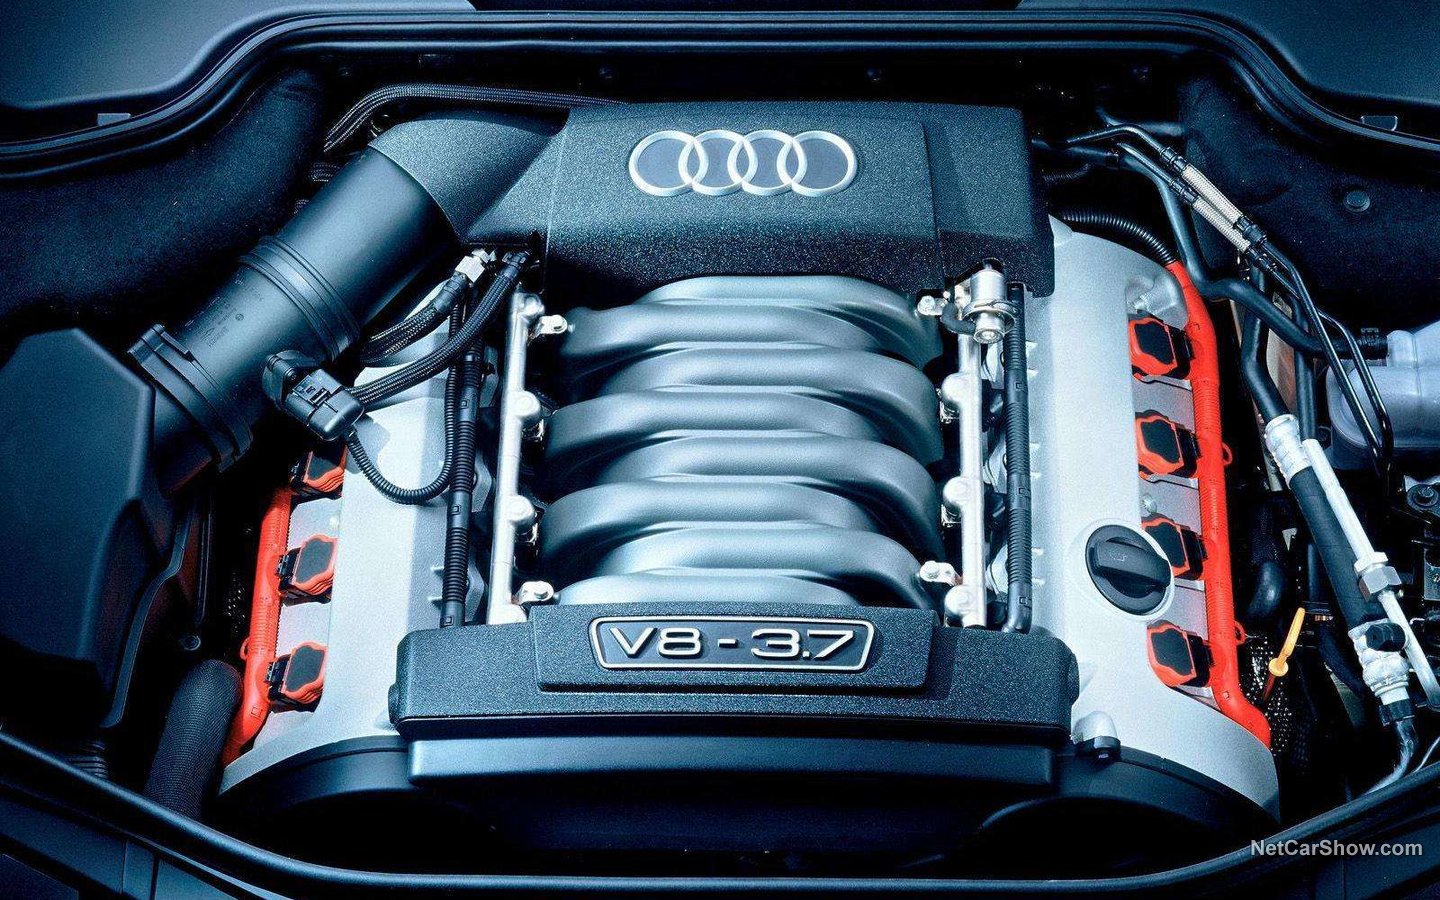 Audi A8 3